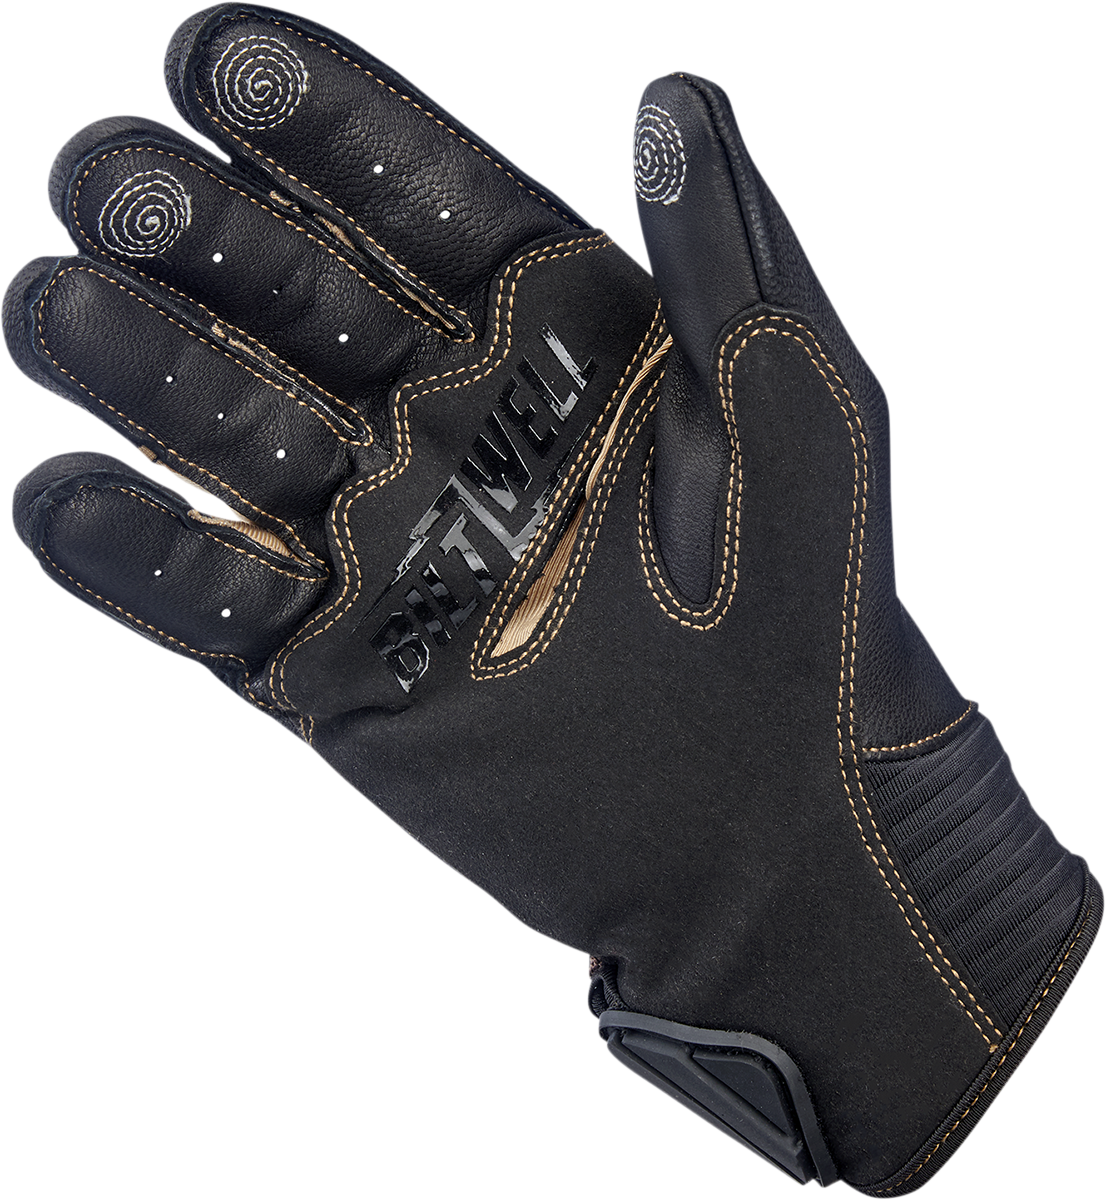 BILTWELL Bridgeport Gloves - Chocolate - Small 1509-0201-302